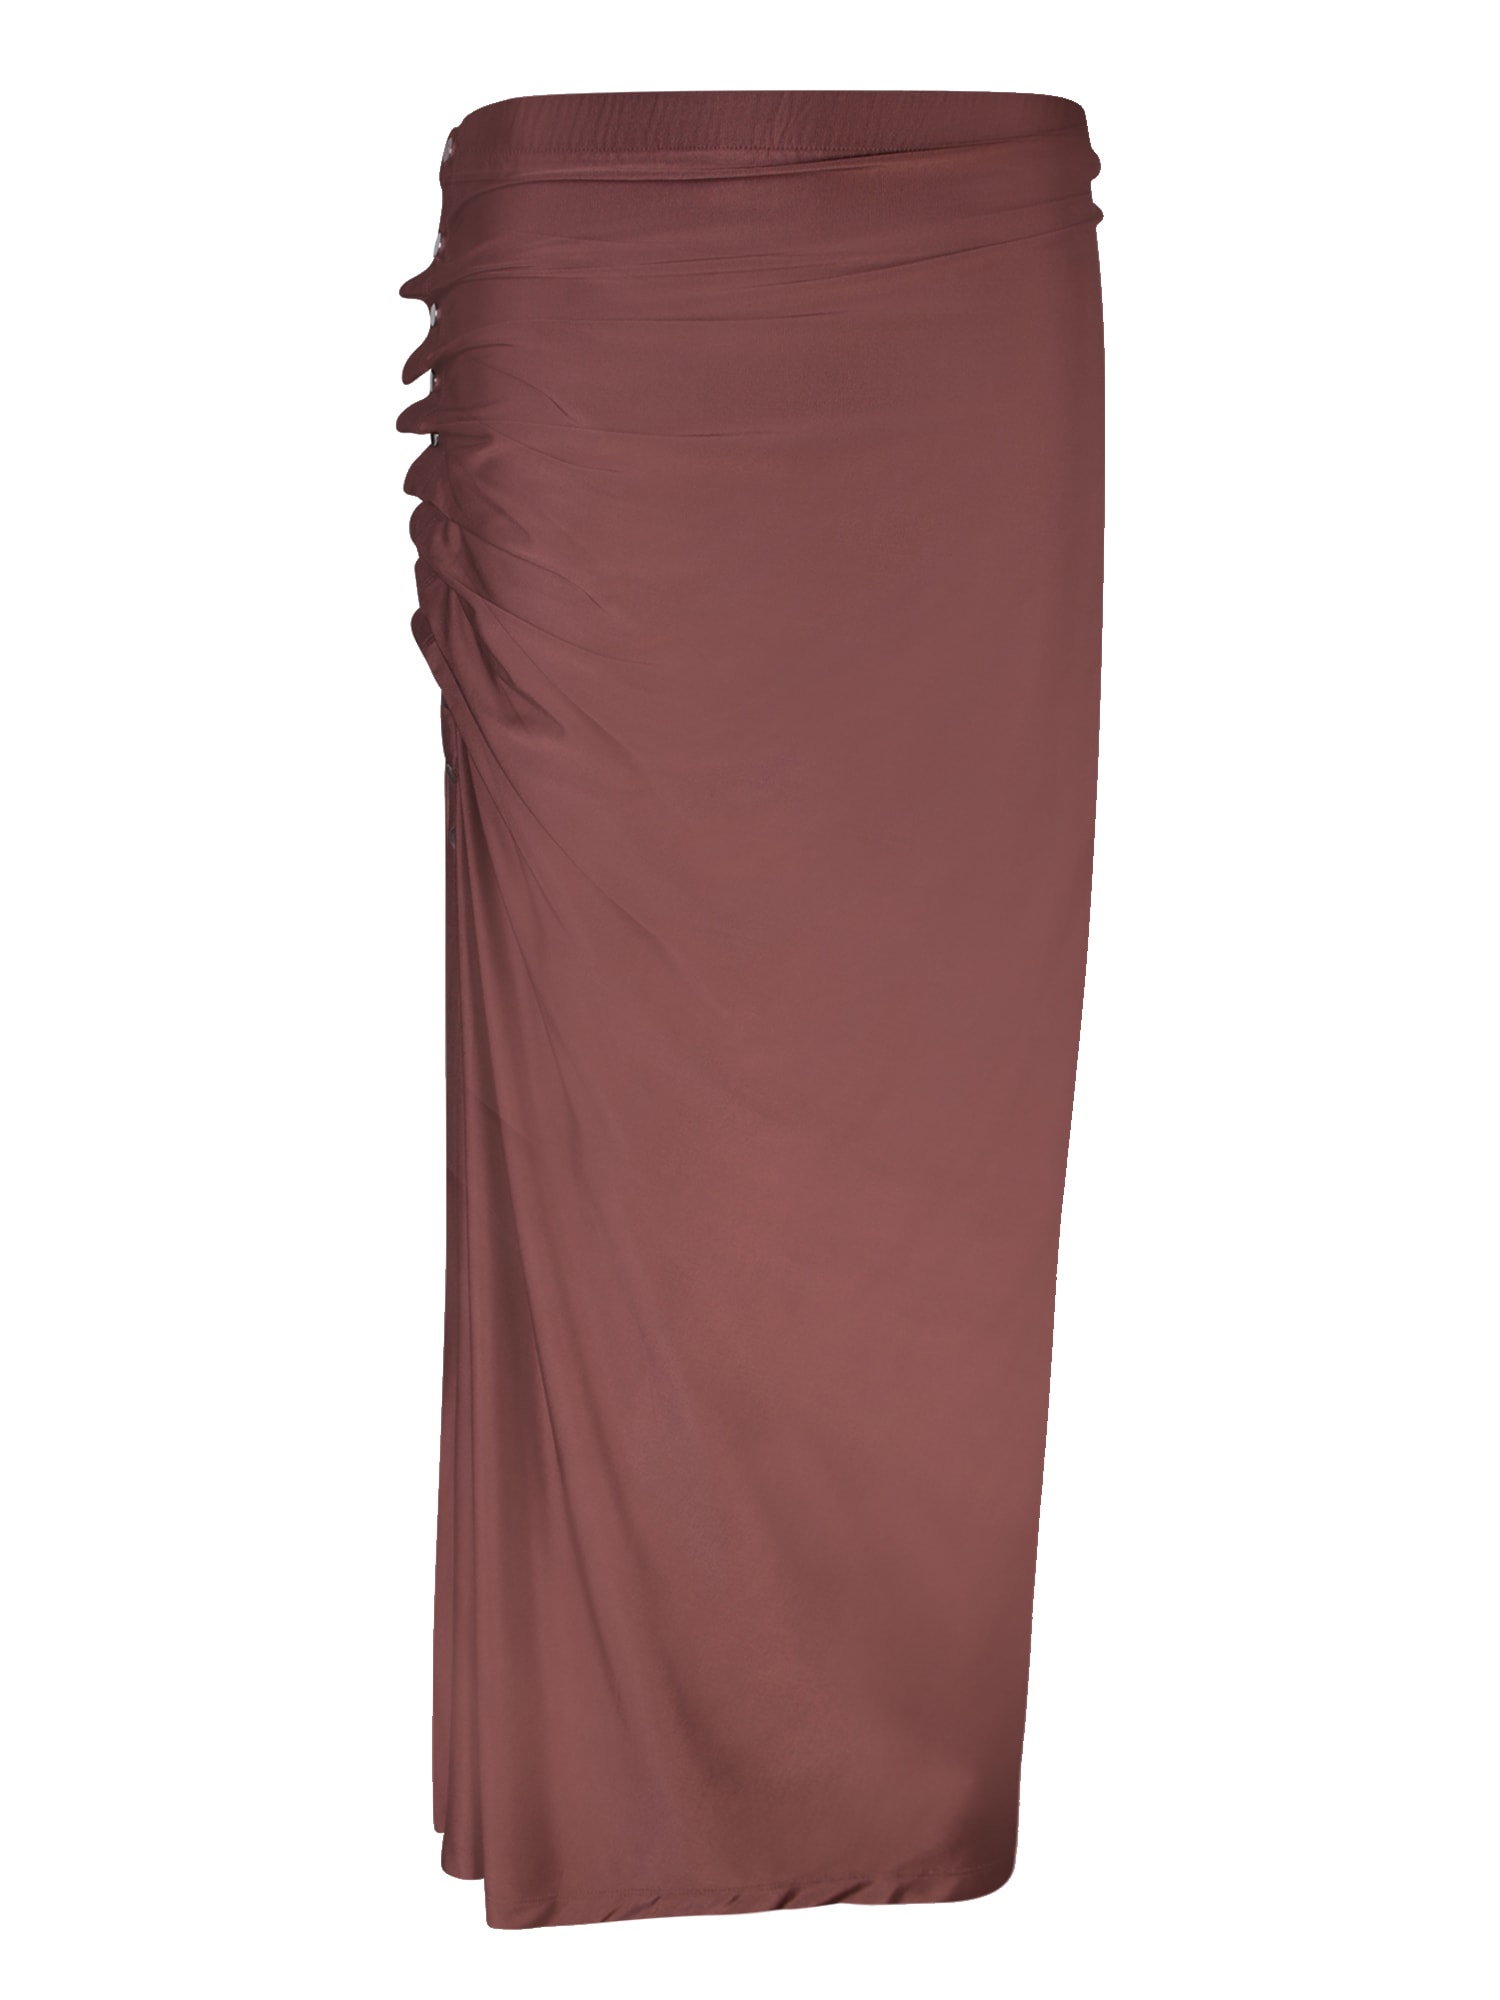 Shop Paco Rabanne Brown Jersey Long Skirt